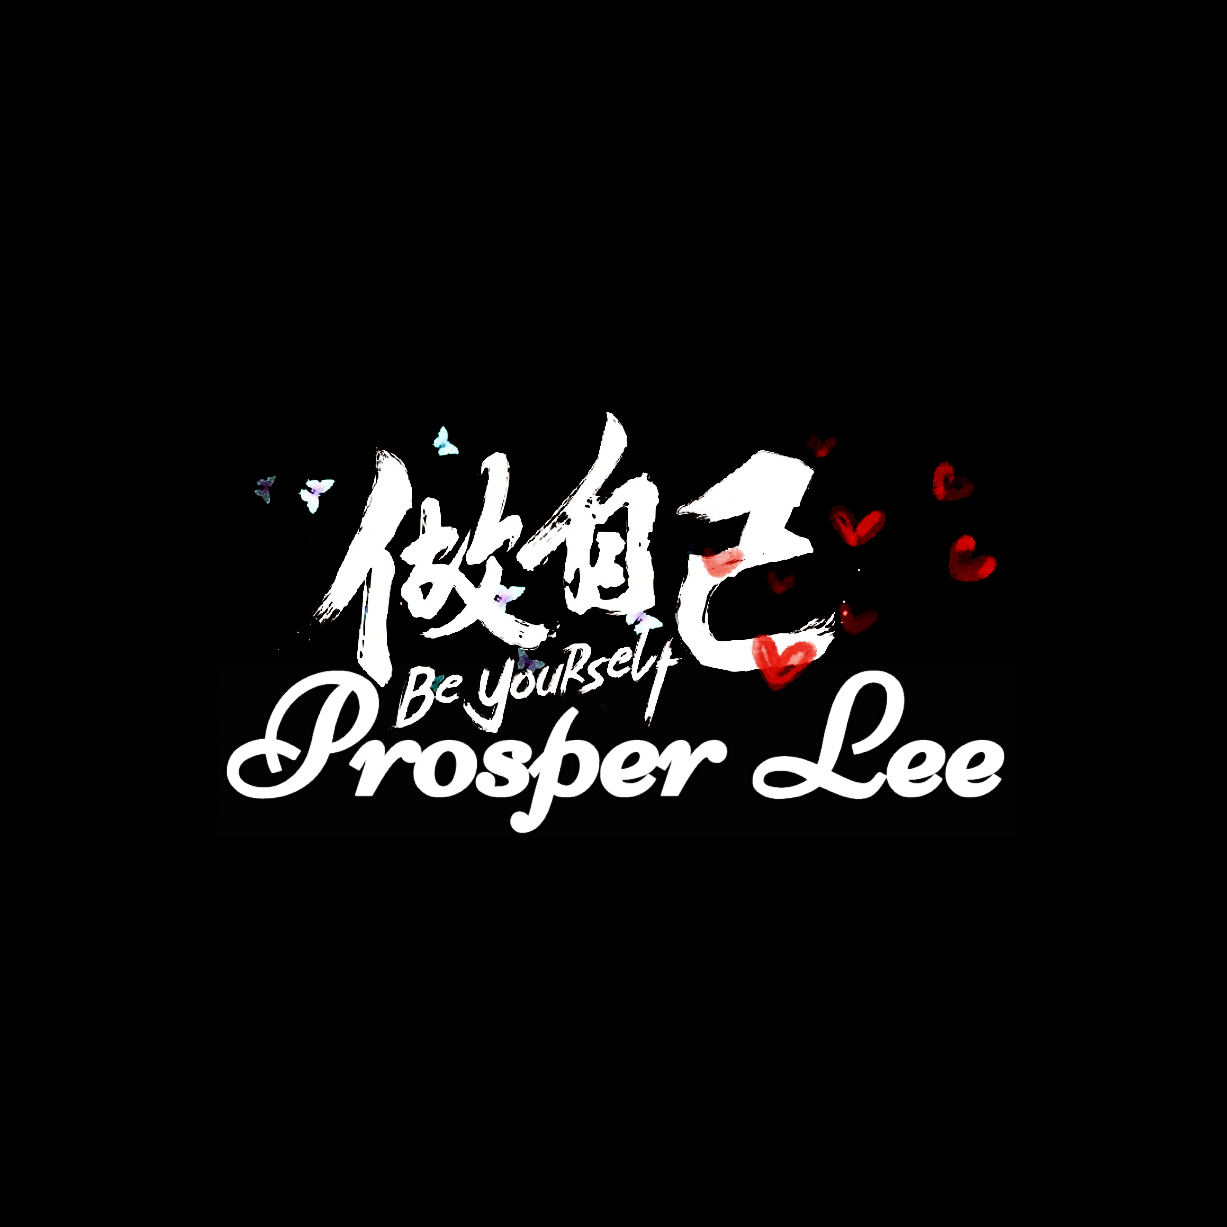 Prosper Lee